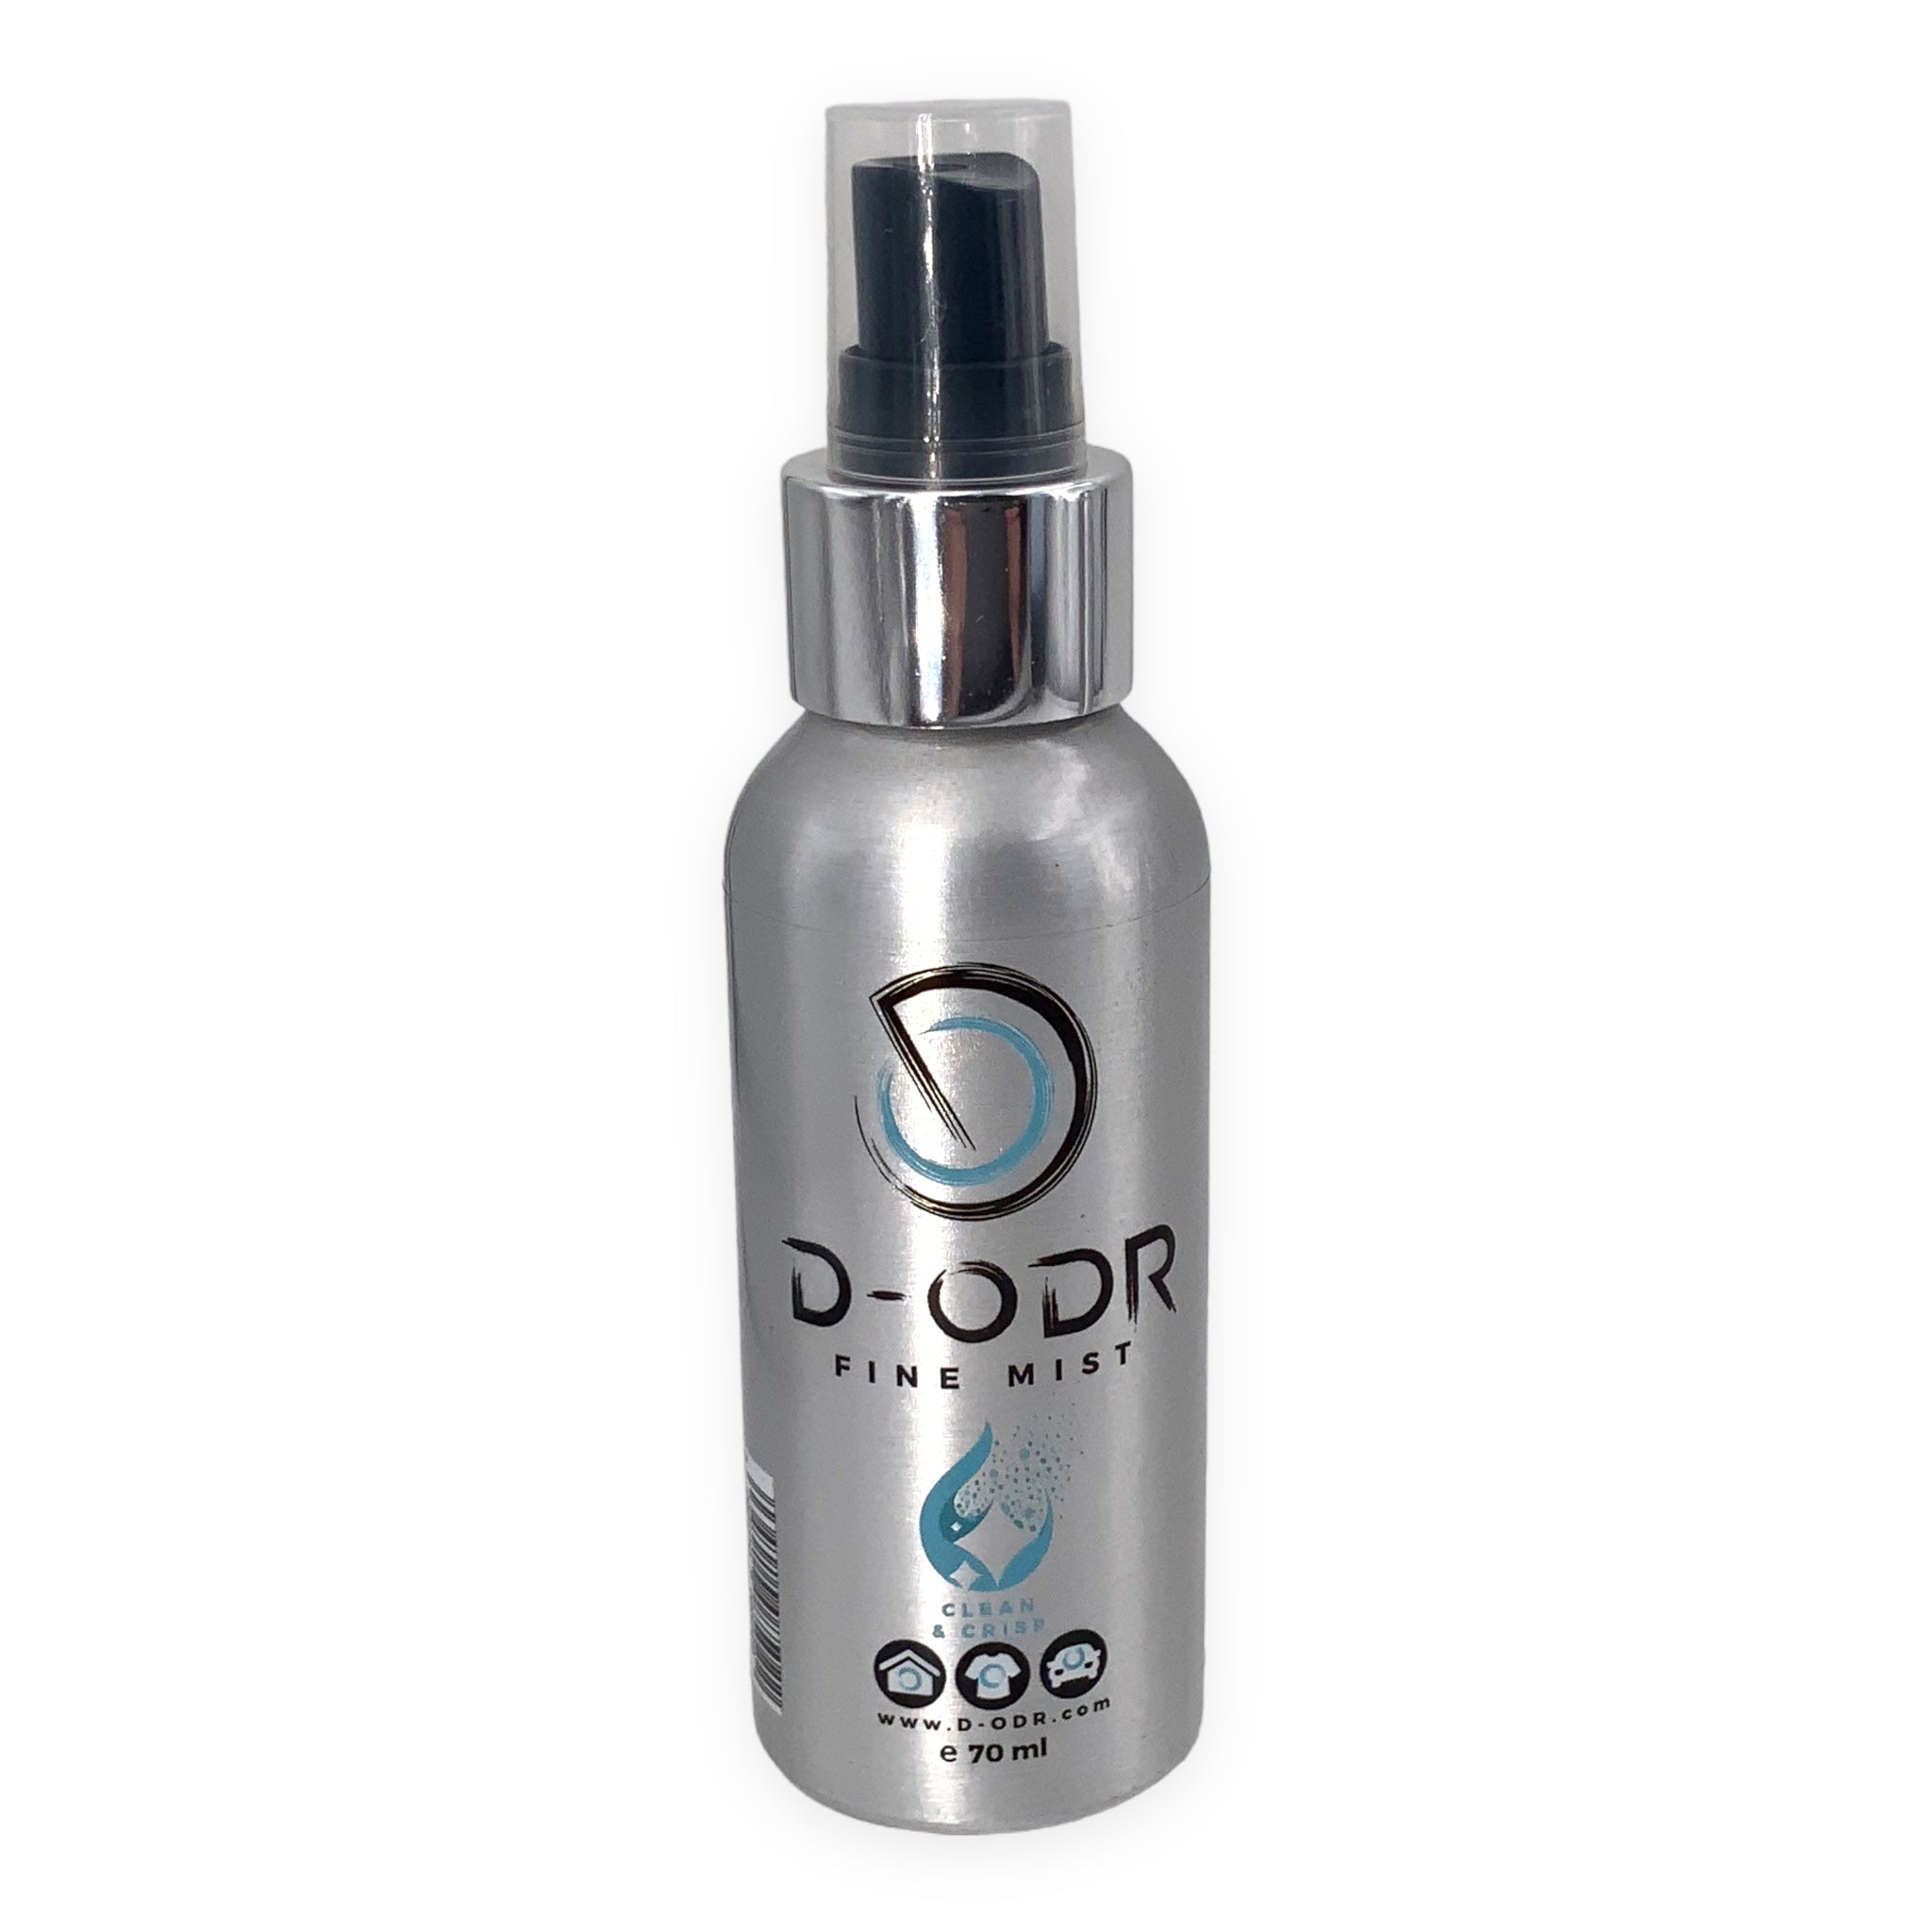 D-ODR Fine Mist - odor remover spray 70ml different aromas